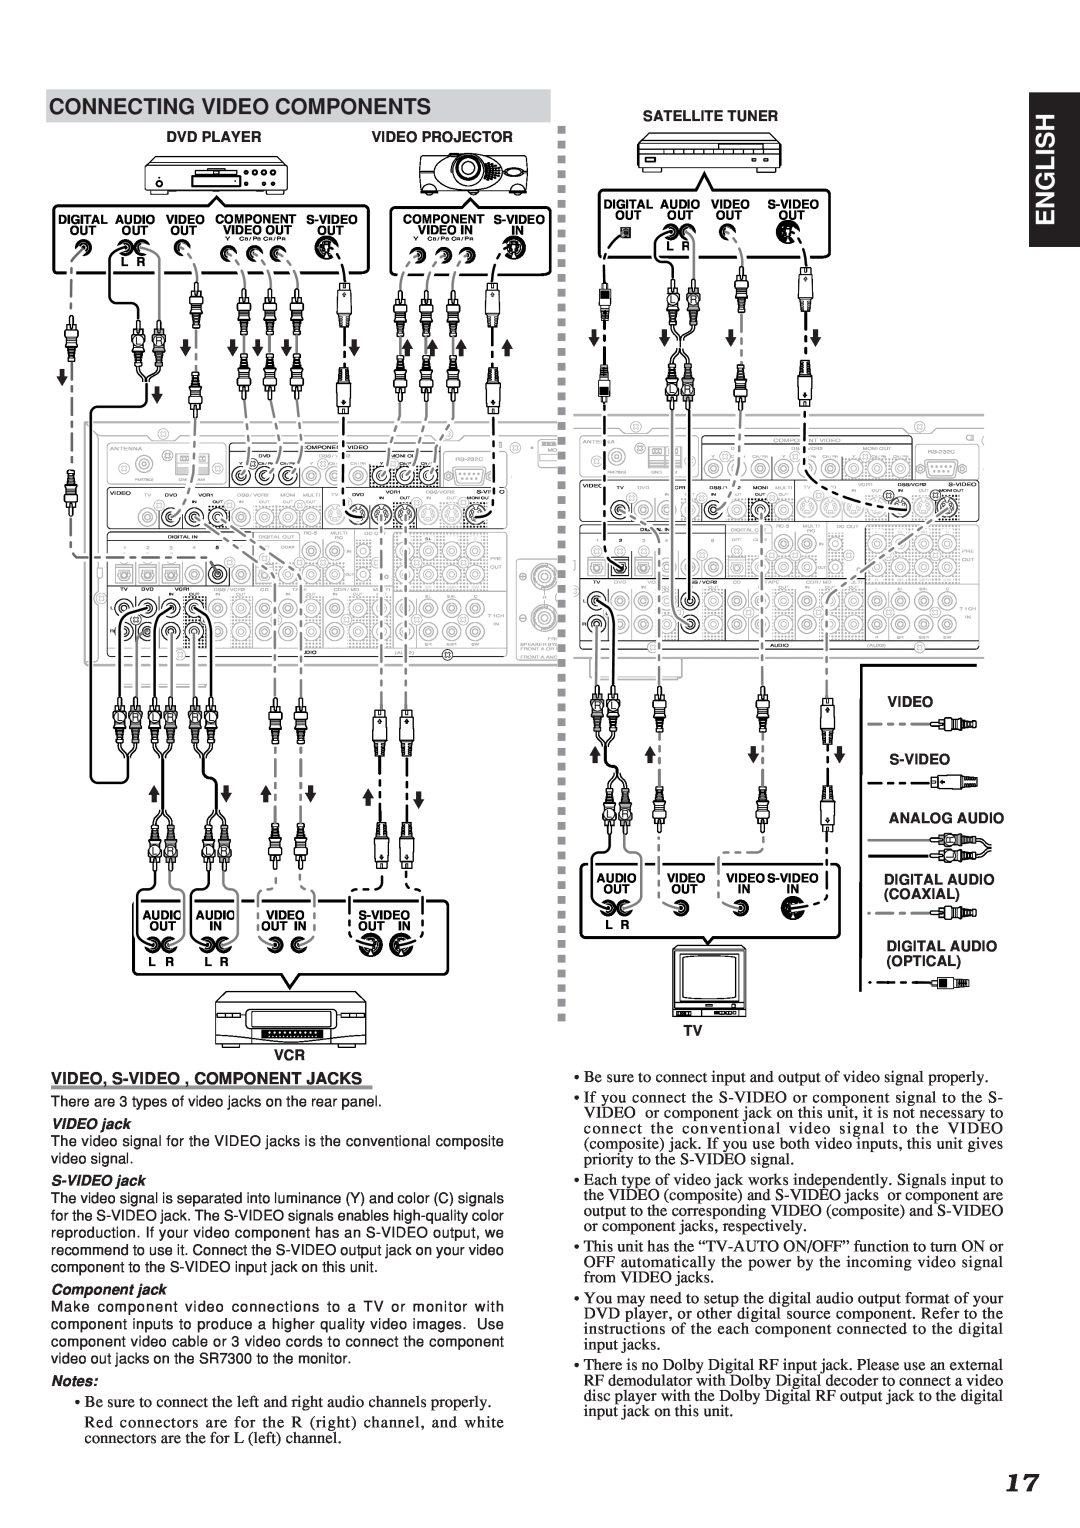 Marantz SR7300OSE manual English, Connecting Video Components, Video, S-Video ,Component Jacks 